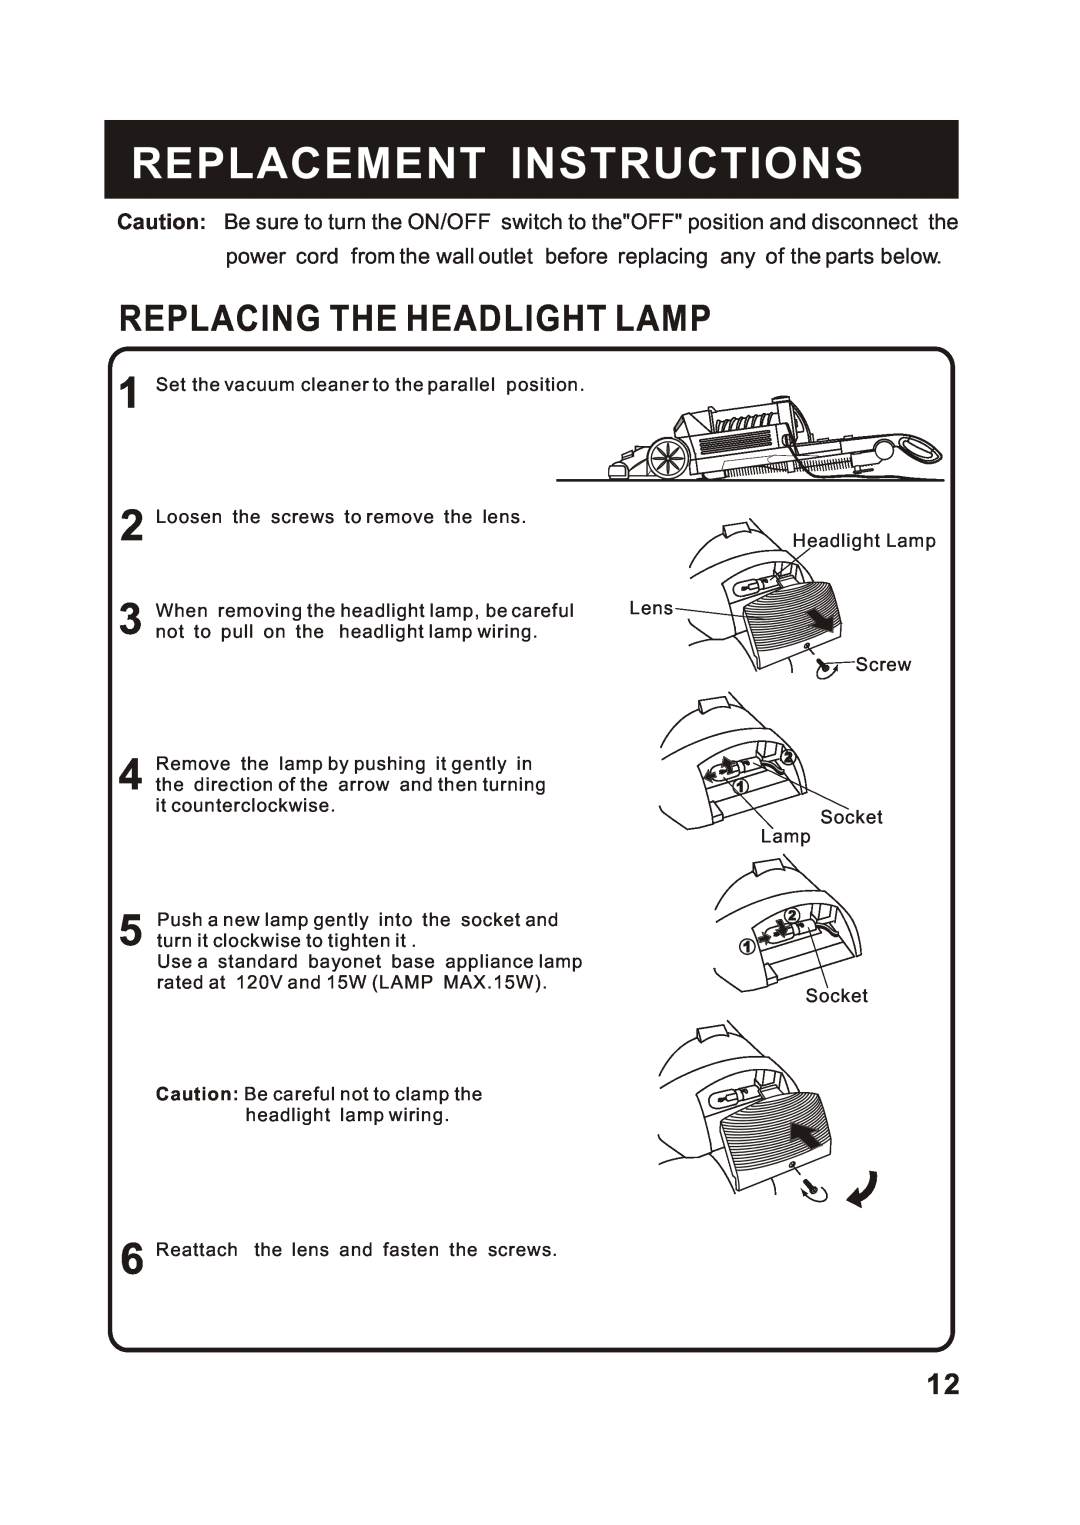 Fantom Vacuum FM760 instruction manual Replacement Instructions, Replacing The Headlight Lamp 